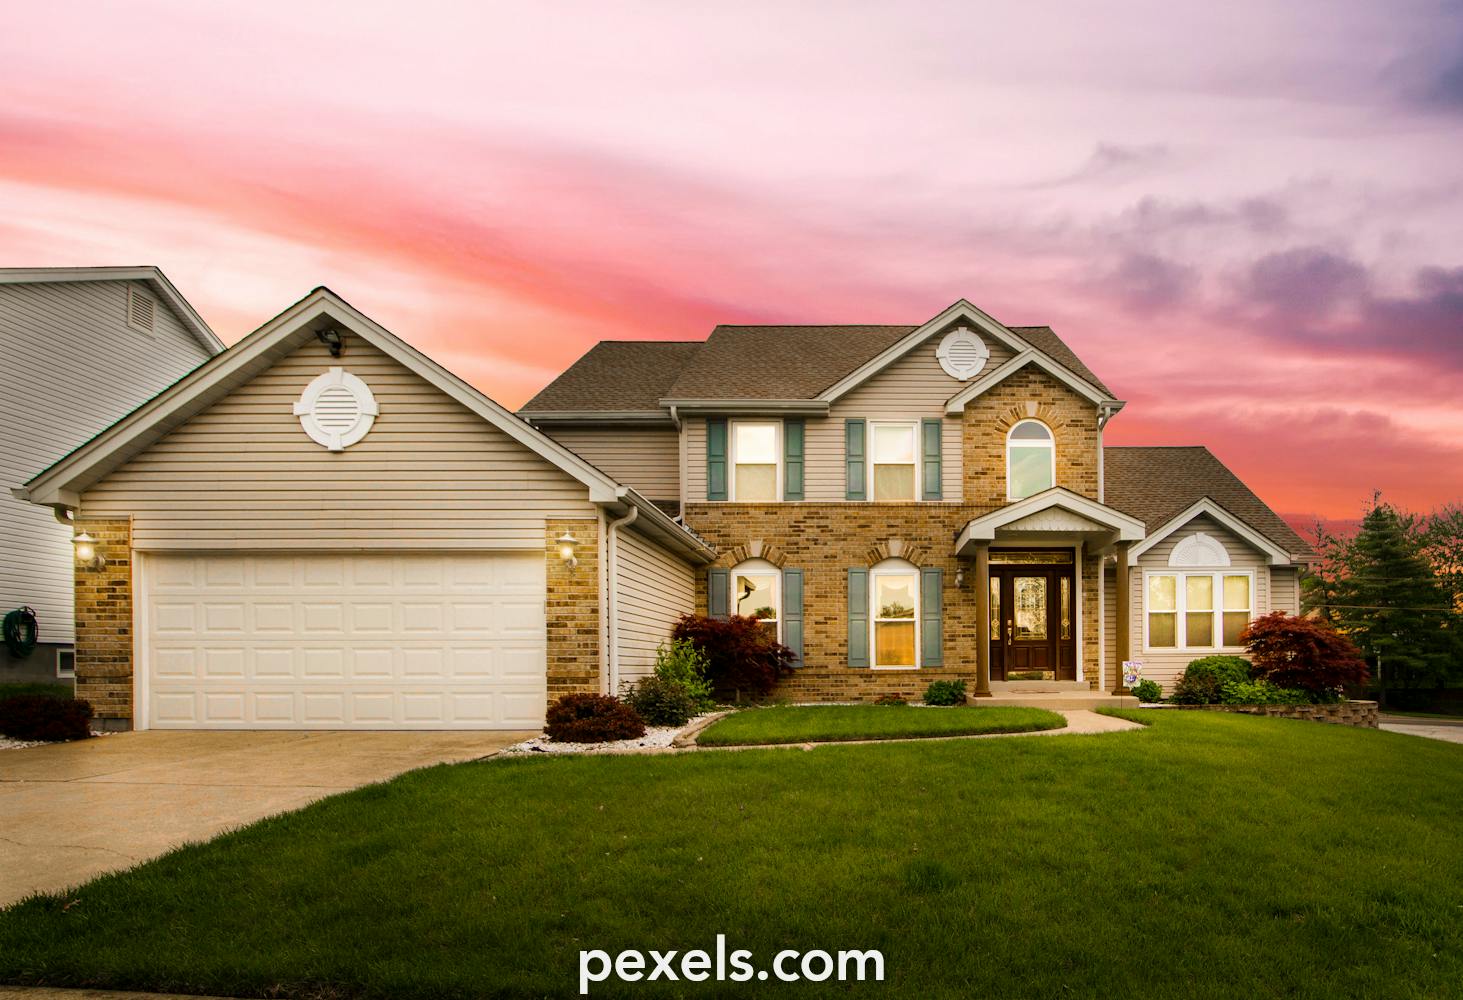 1000  Interesting Single Family Home Photos пїЅ Pexels пїЅ Free Stock